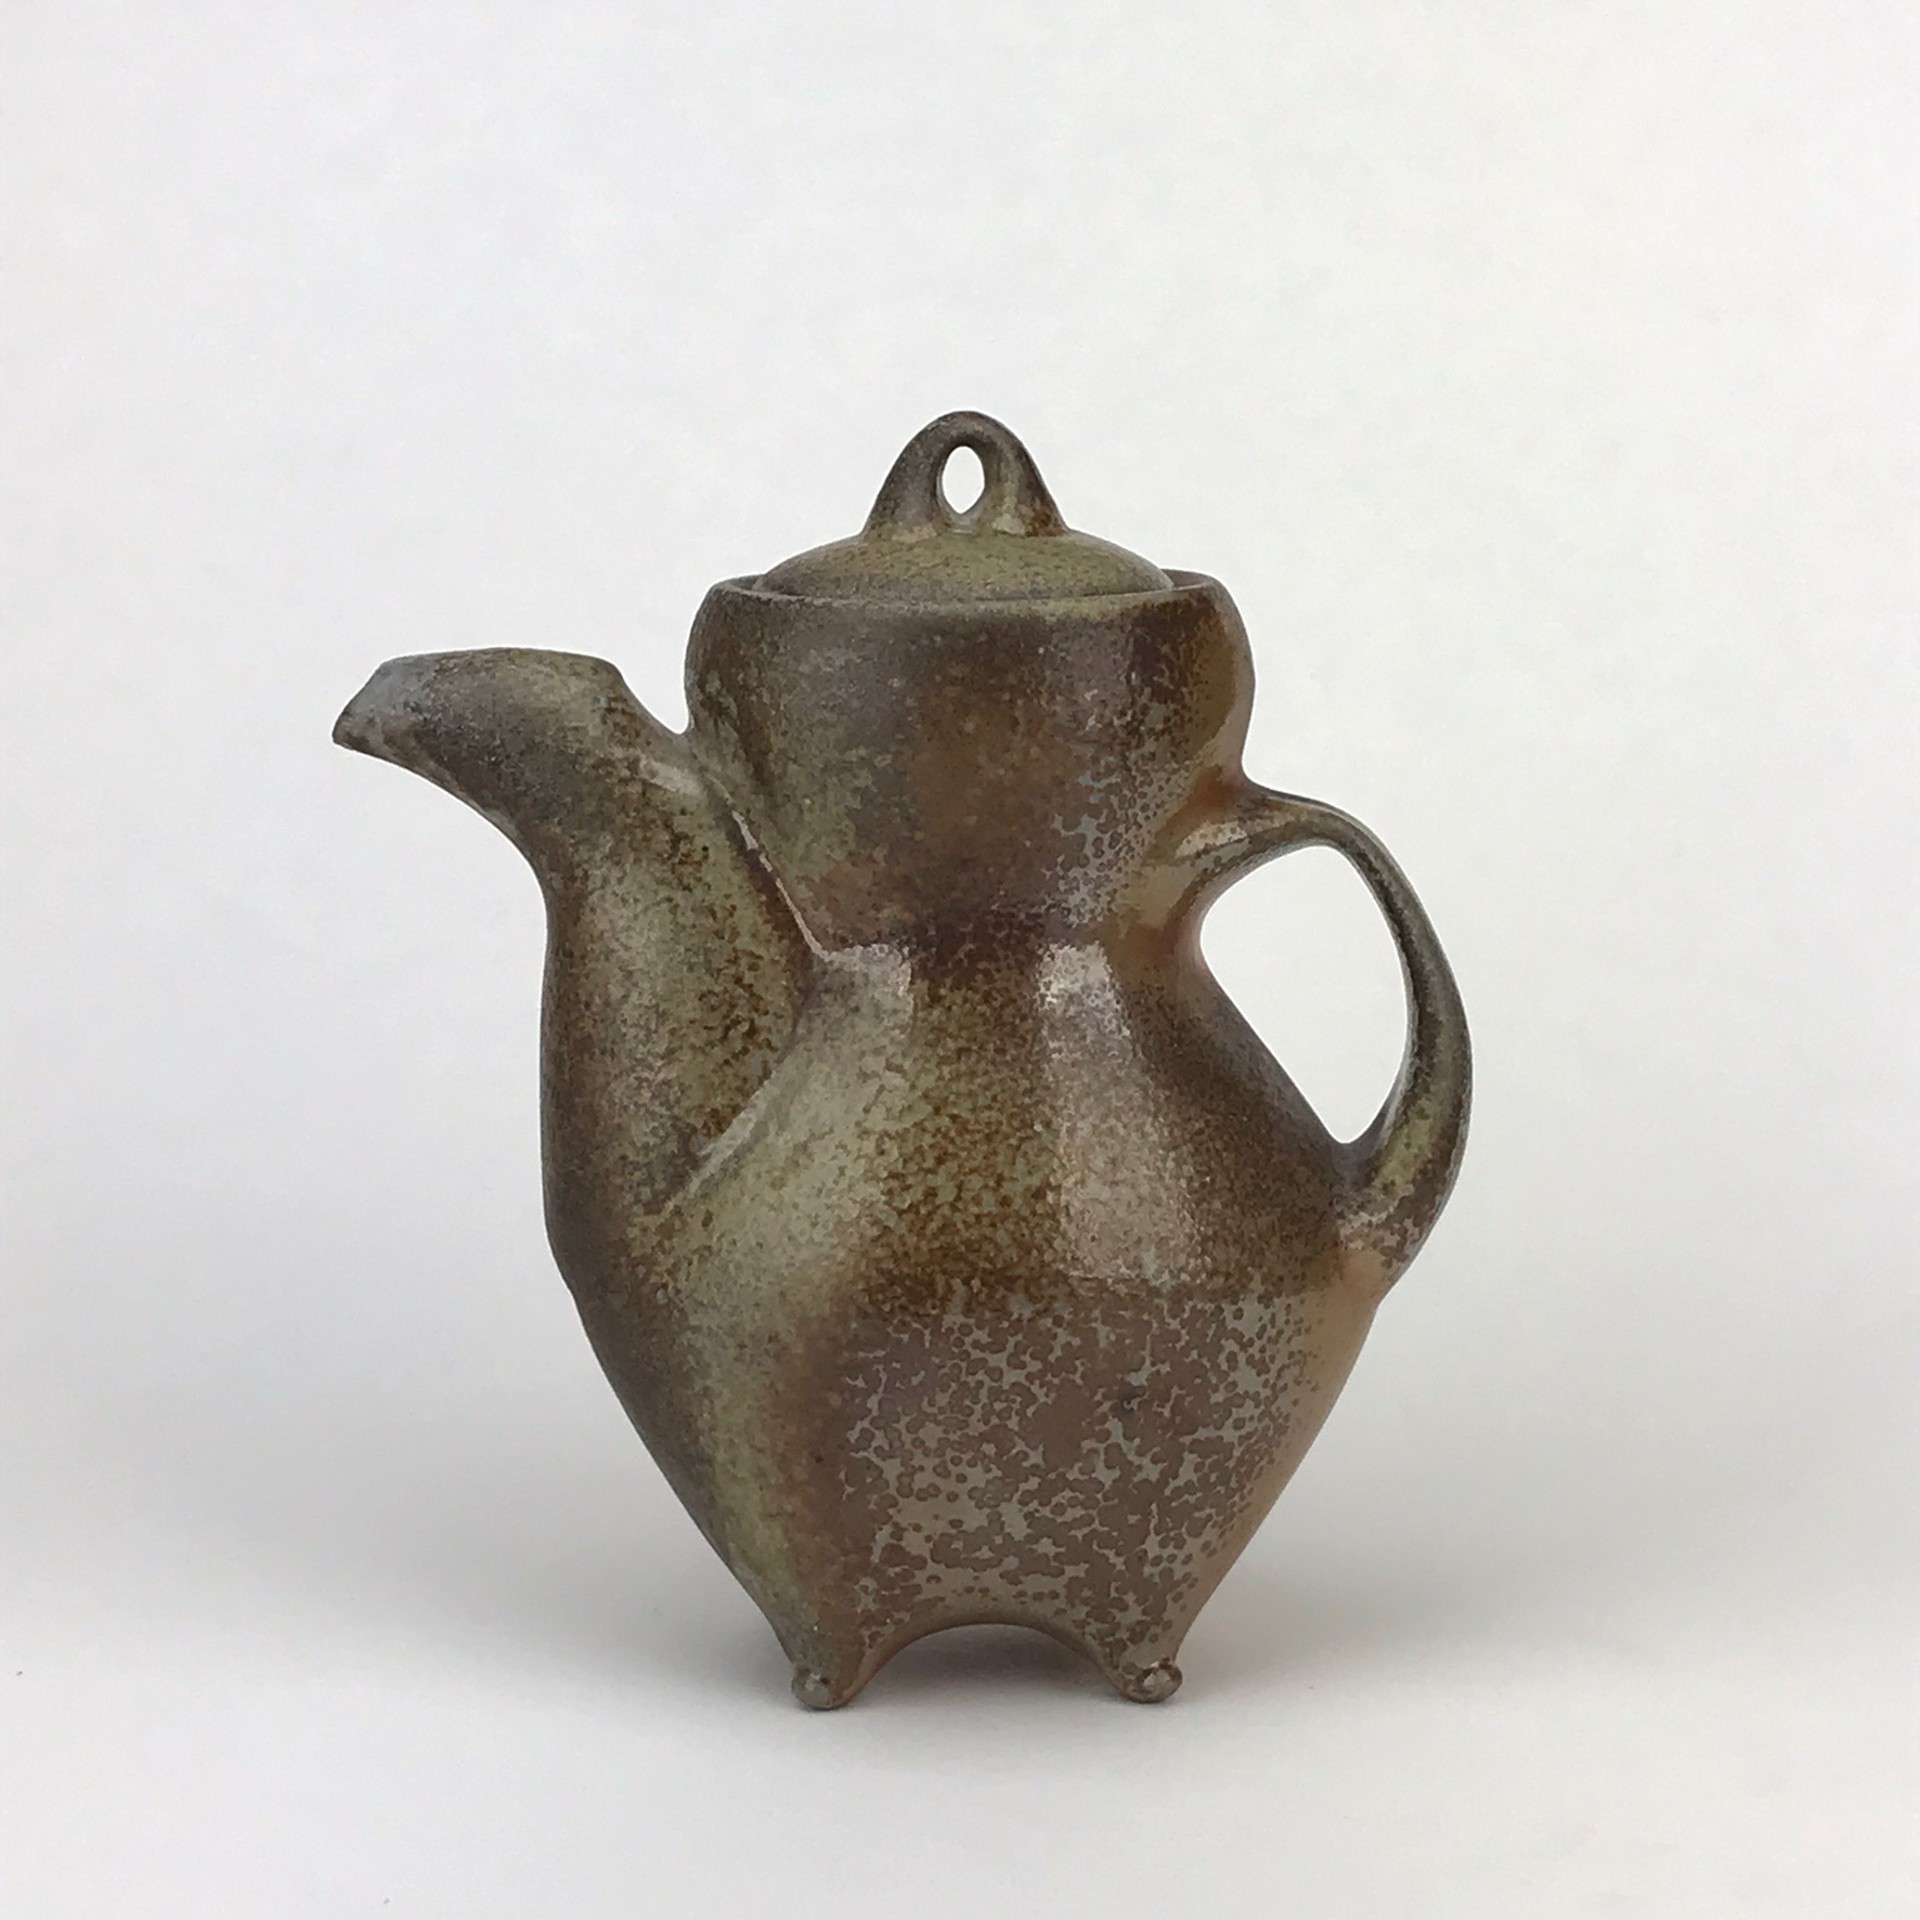 Tea Pot by Tara Wilson